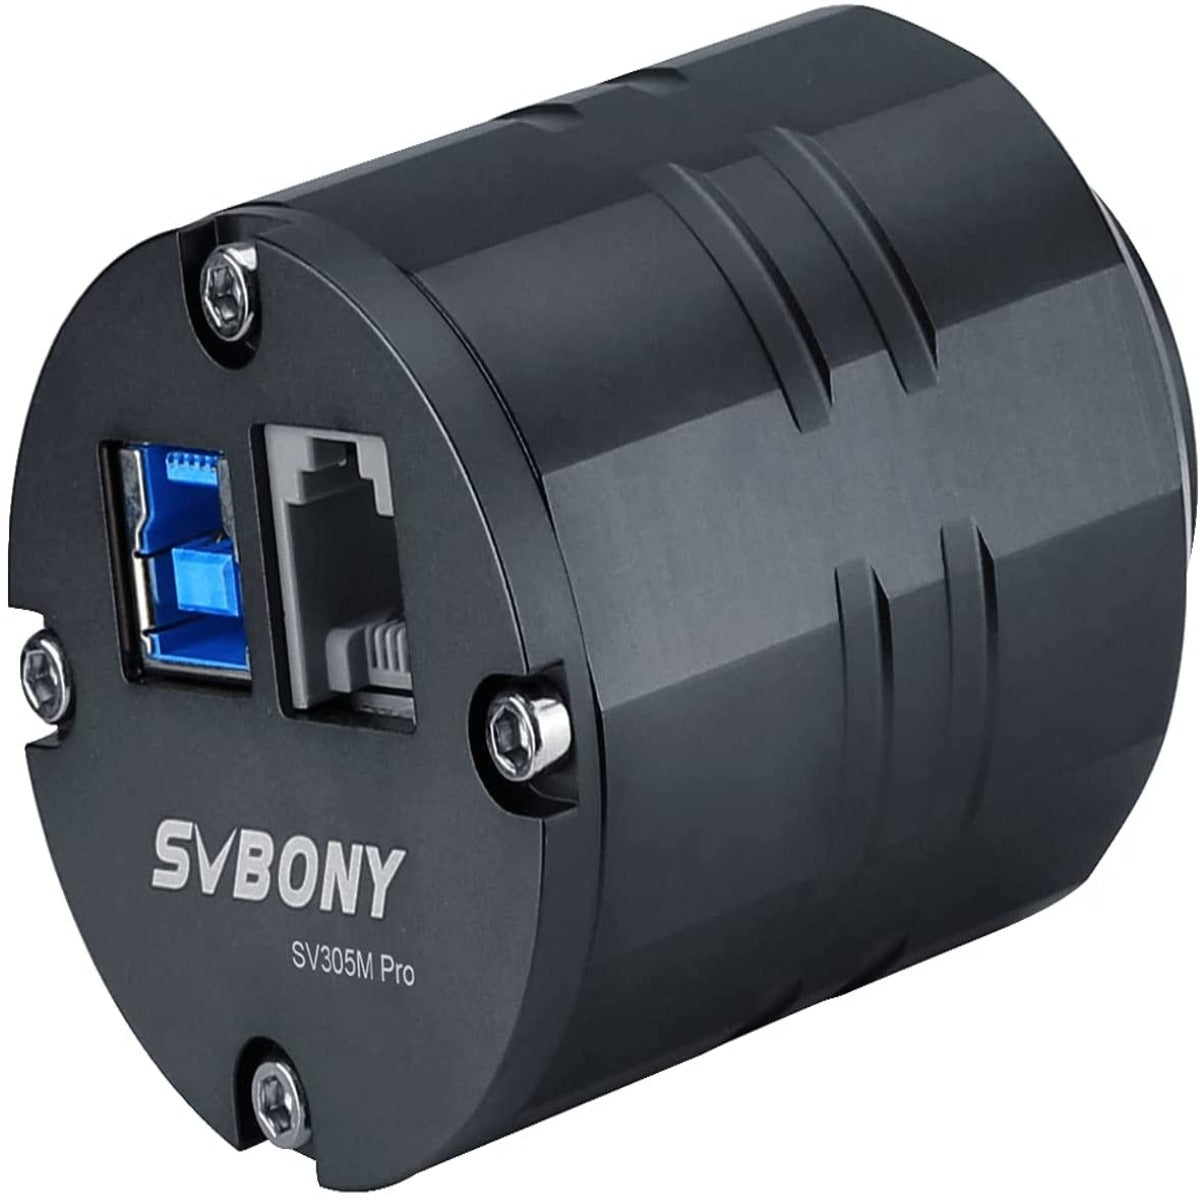 Svbony SV305M Pro Telescope Camera Astronomy, Telescope eyepiece with 2MP USB3.0 1.25 Inches,Guide Camera